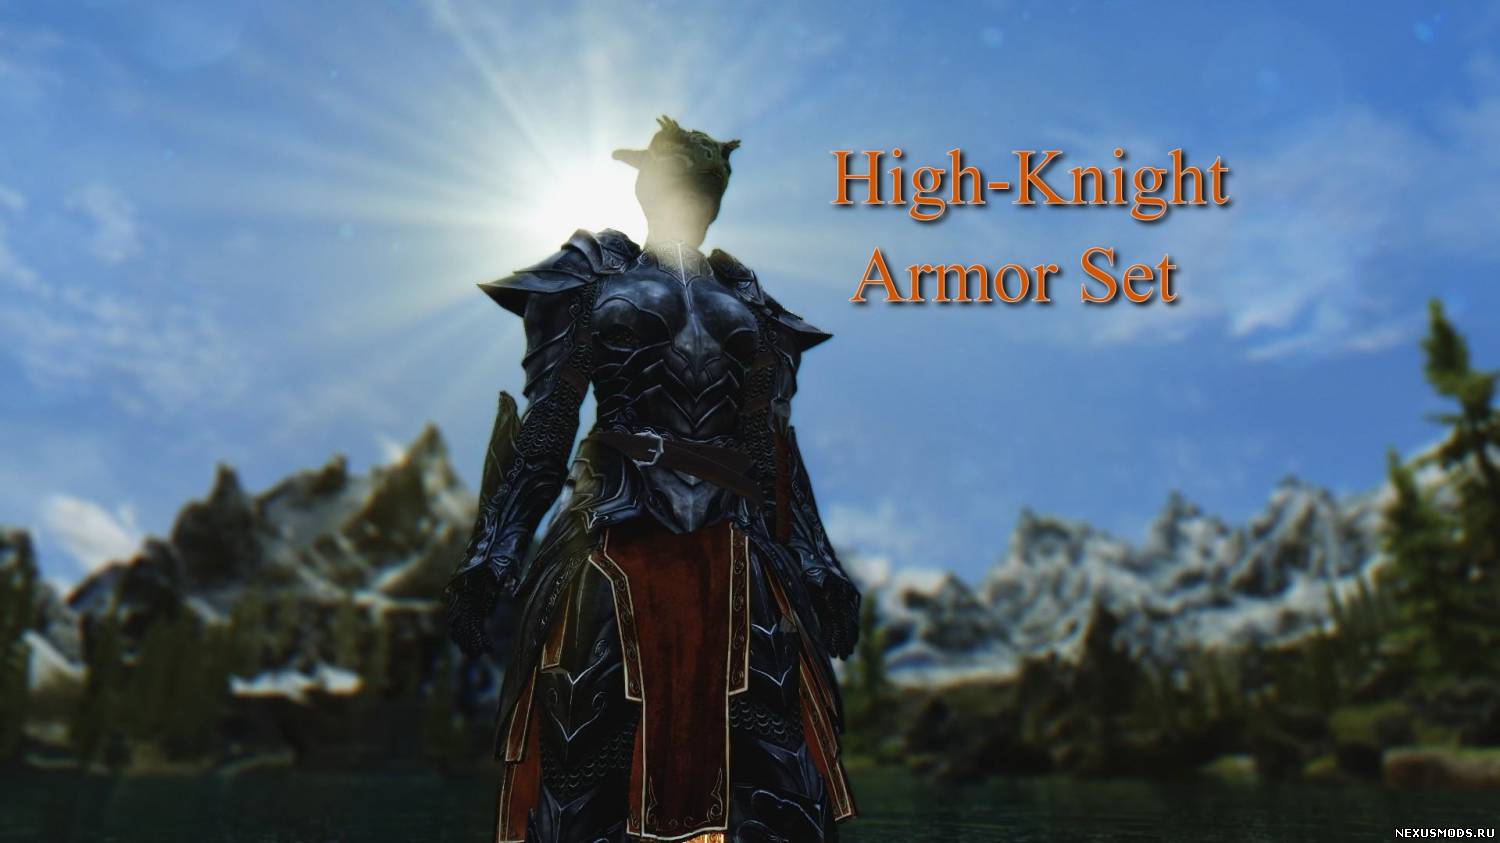 High-Knight Armor Set